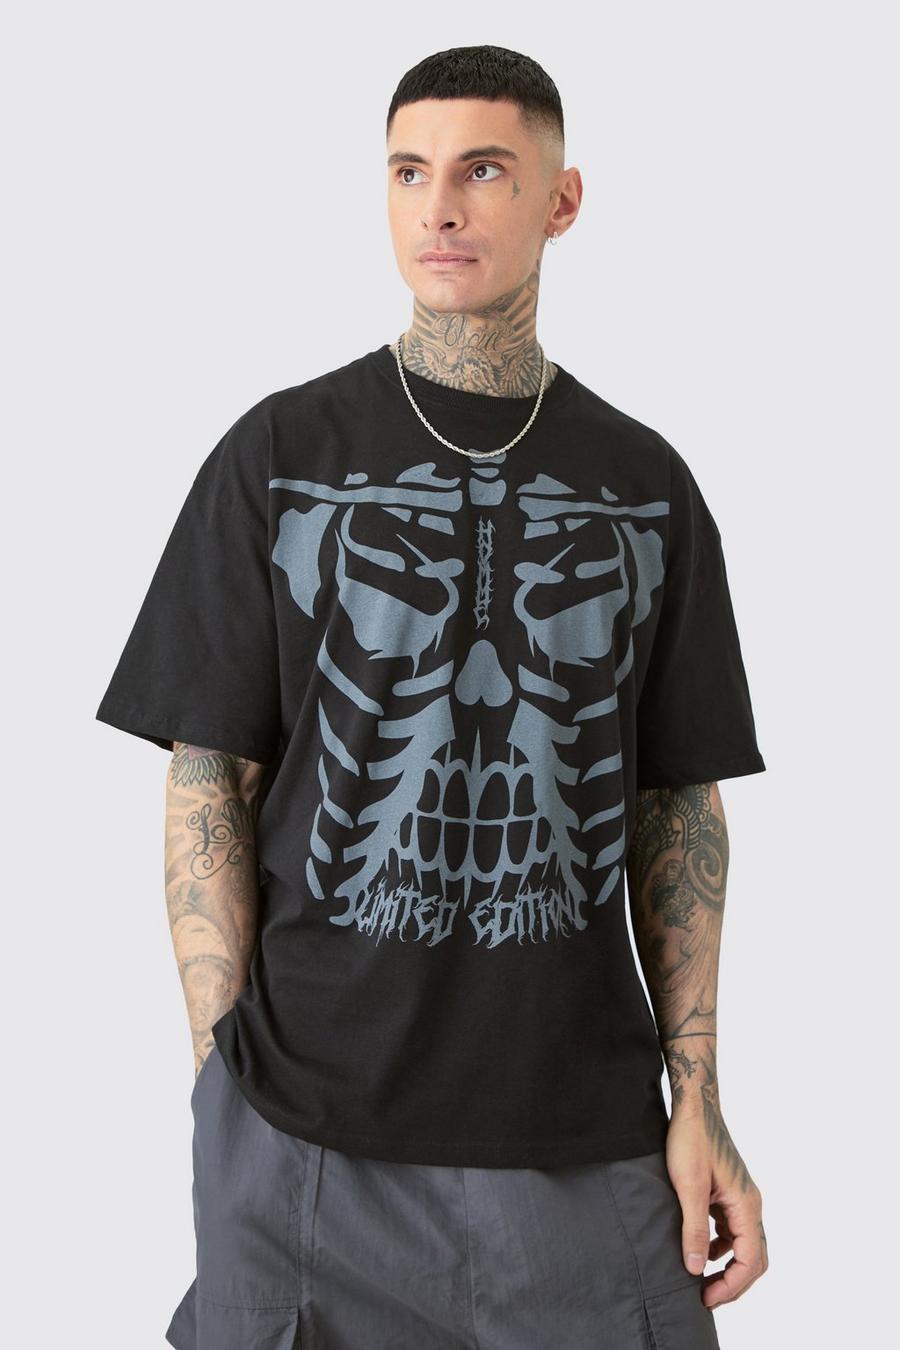 Tall schwarzes T-Shirt mit Skelett-Print, Black